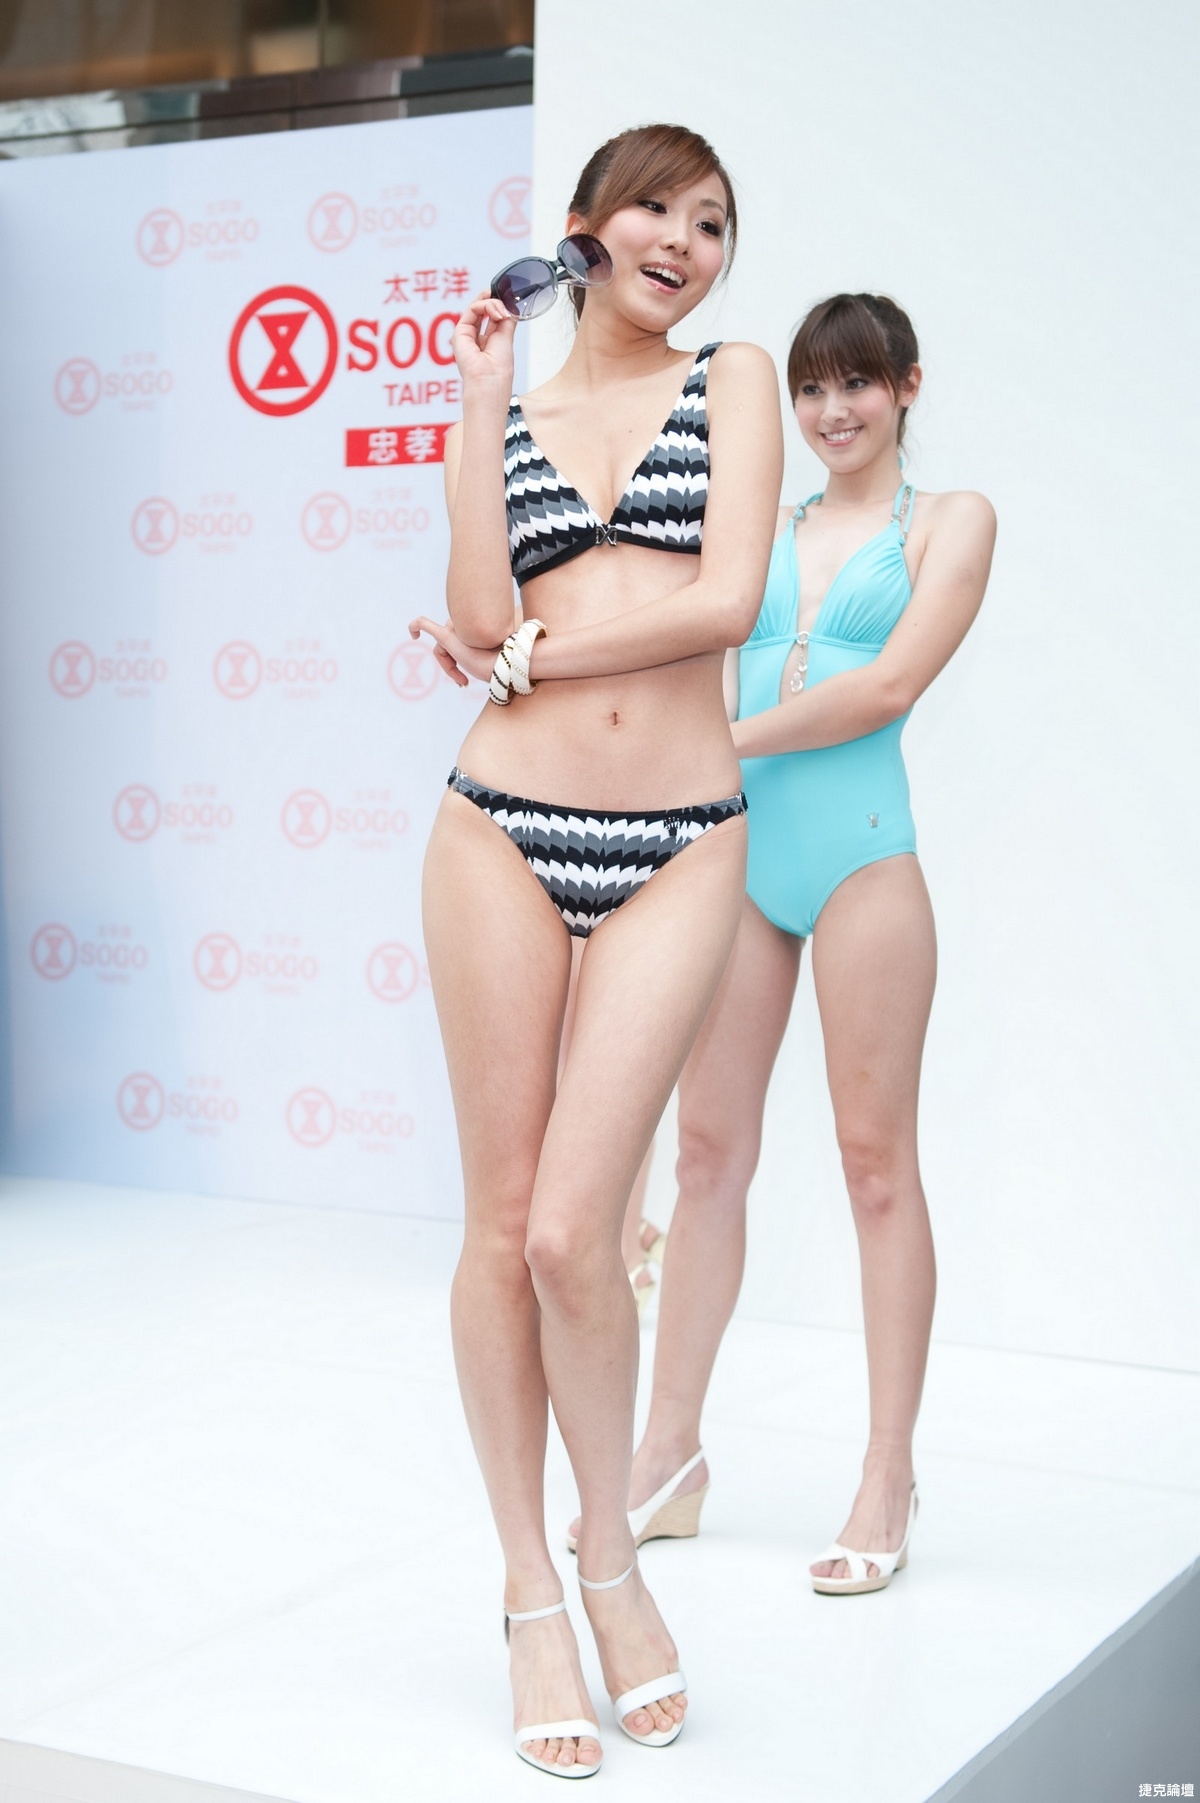 【show gir系列】太平洋SoGo忠孝館伊林model泳裝秀【37P】 - 貼圖 - 絲襪美腿 -